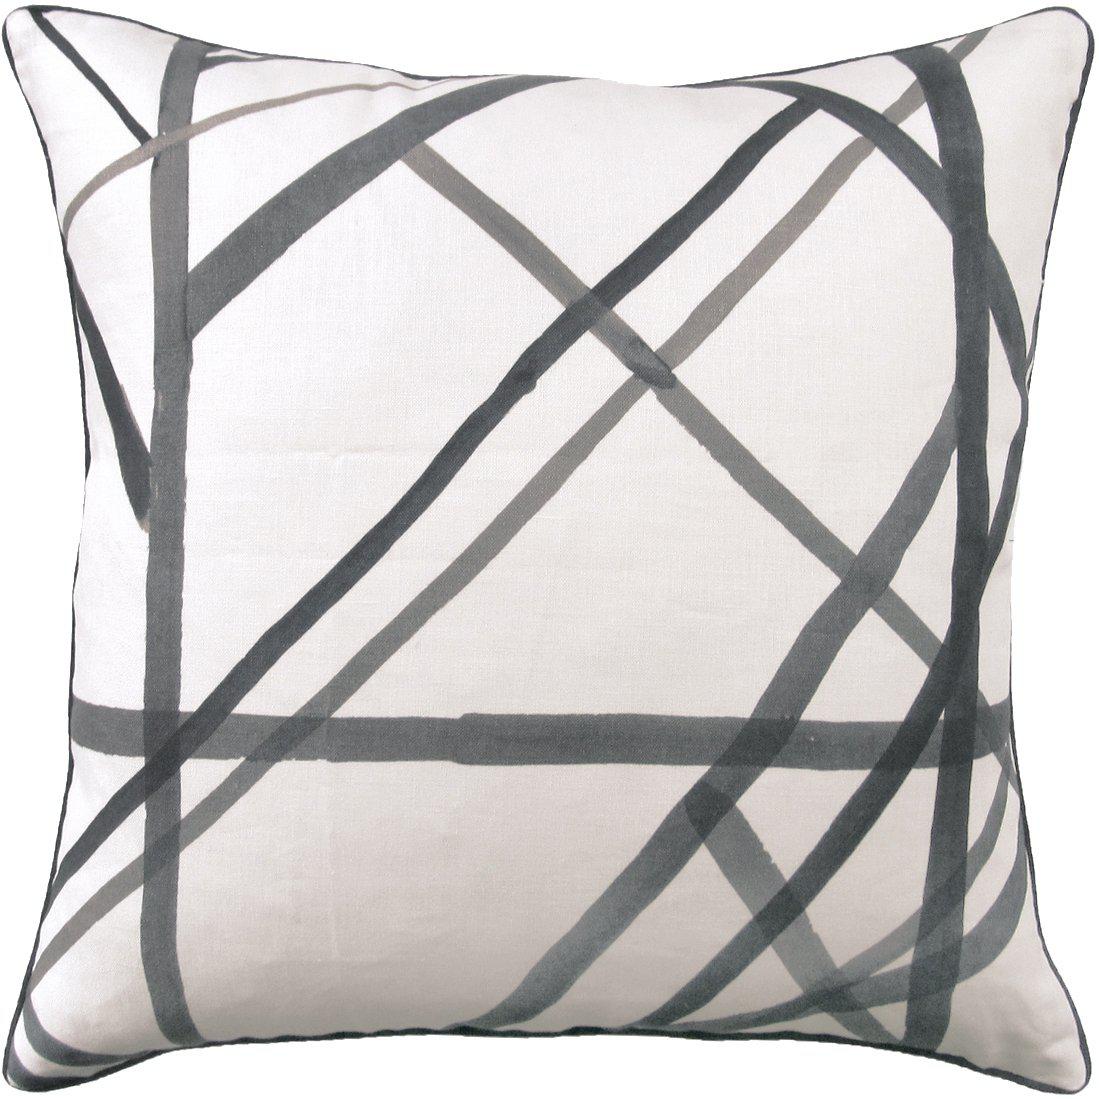 Channels-Ryan Studio-Decorative Pillows-Artistic Elements